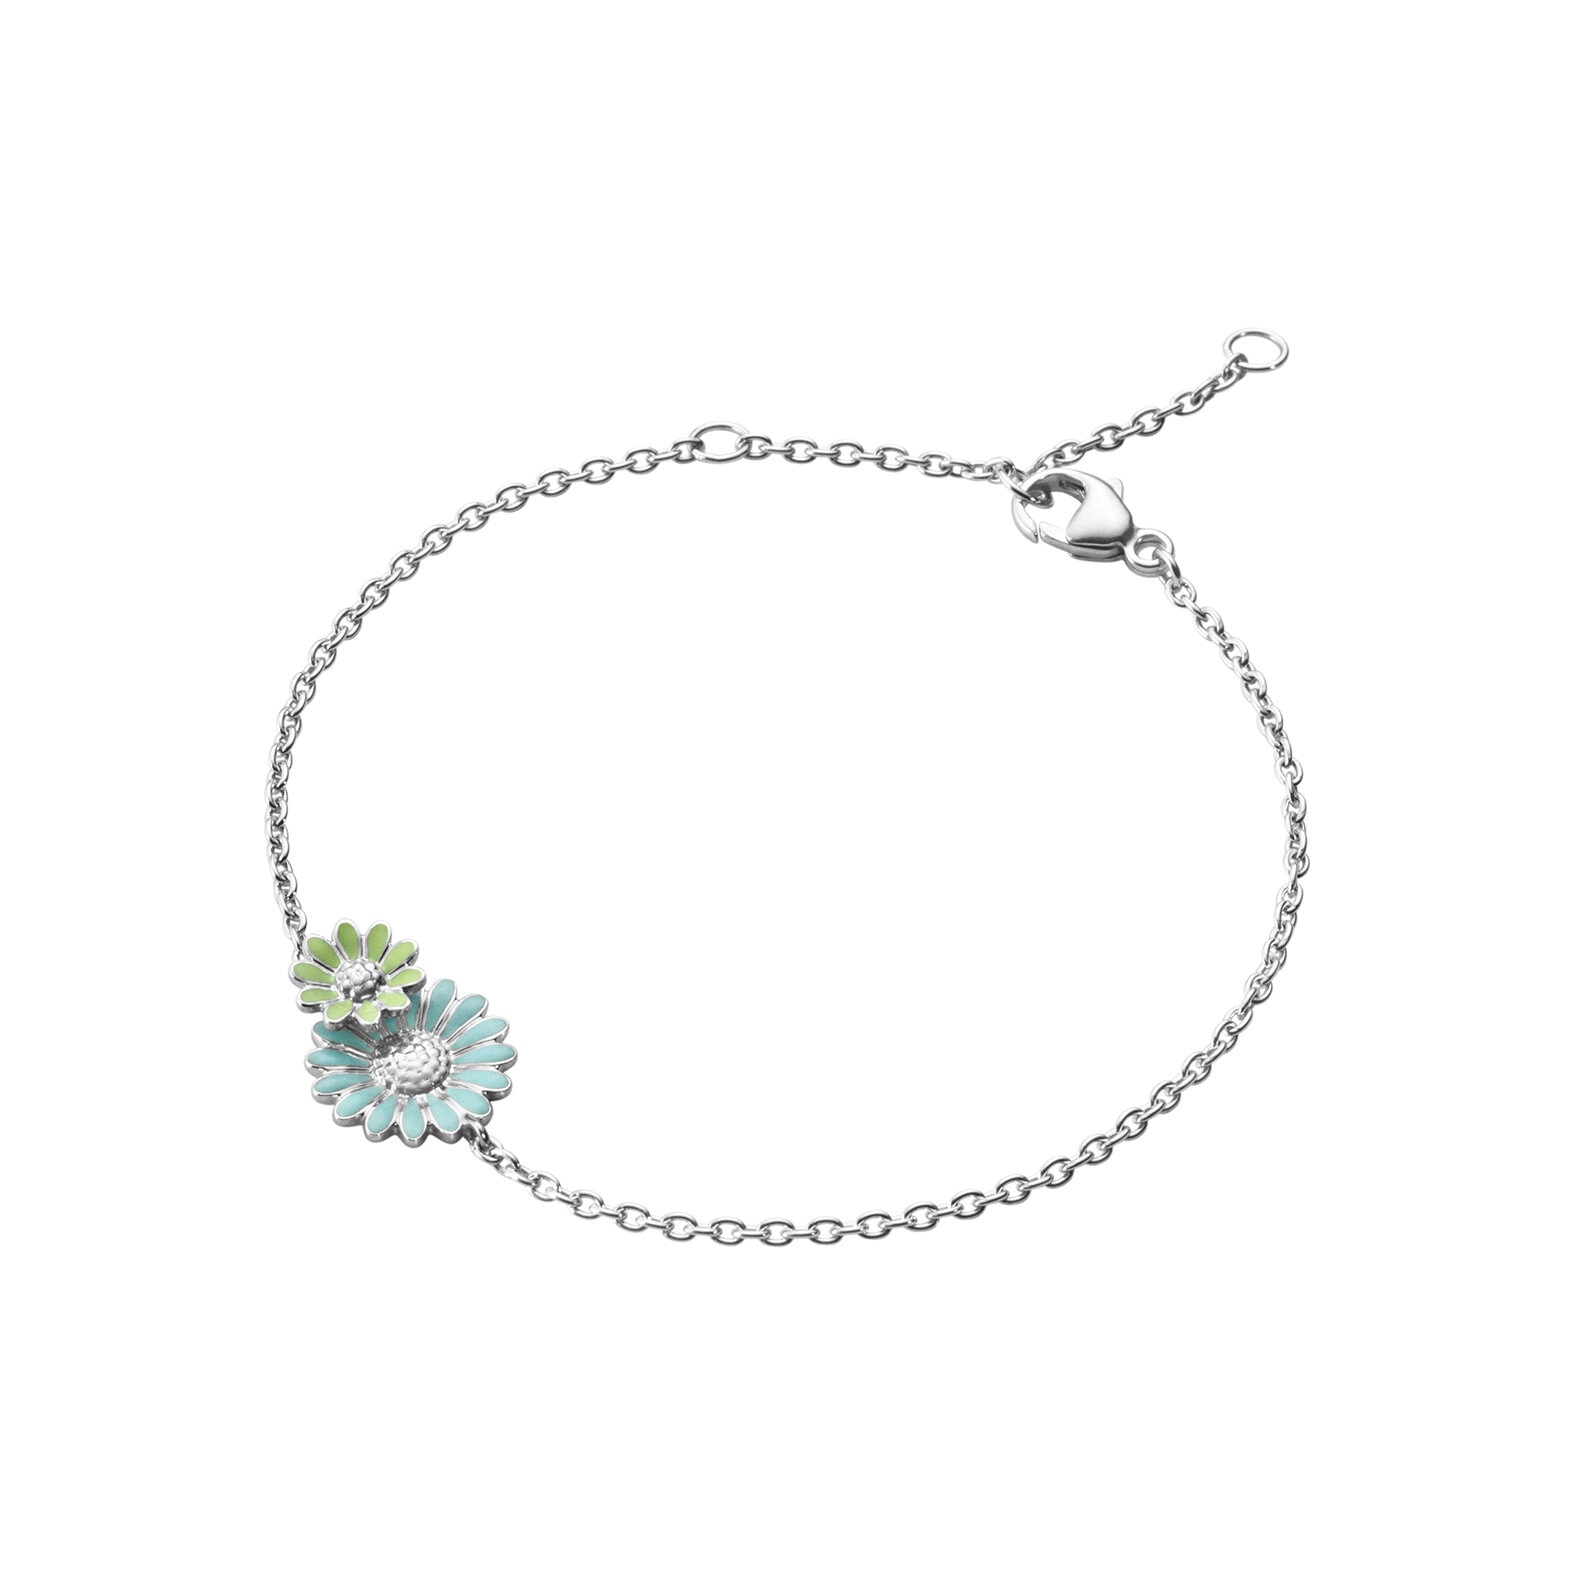 Daisy bracelet (blue/green)